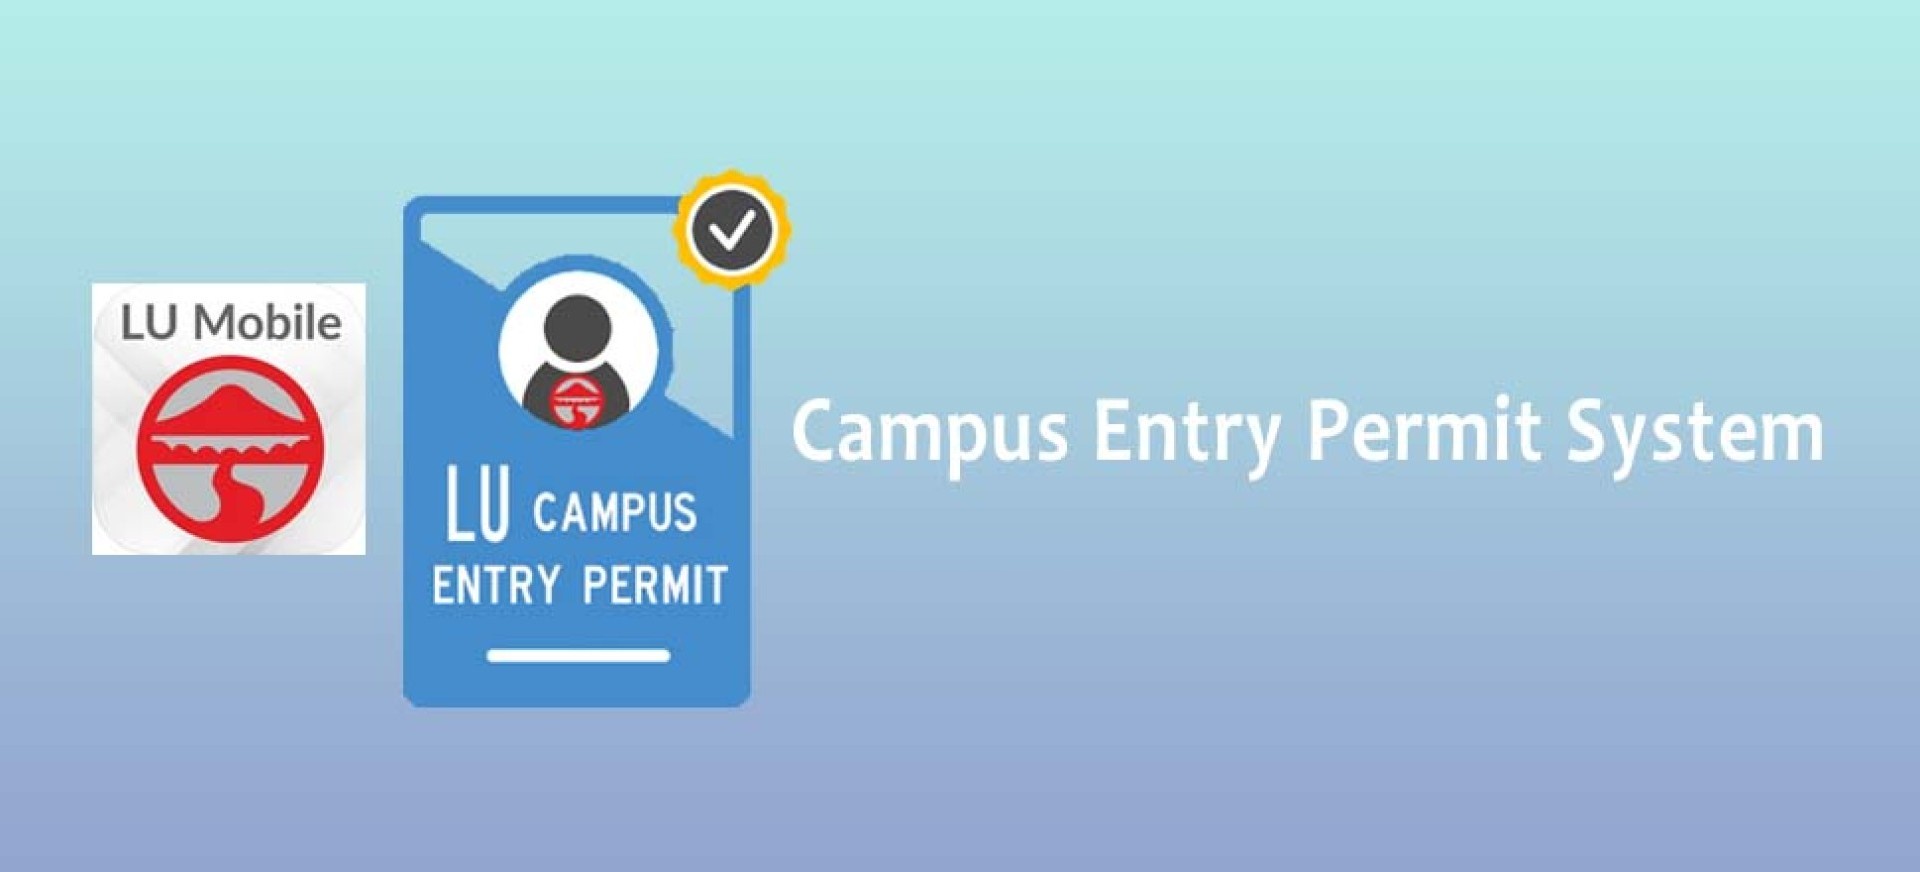 Campus Entry Permit System